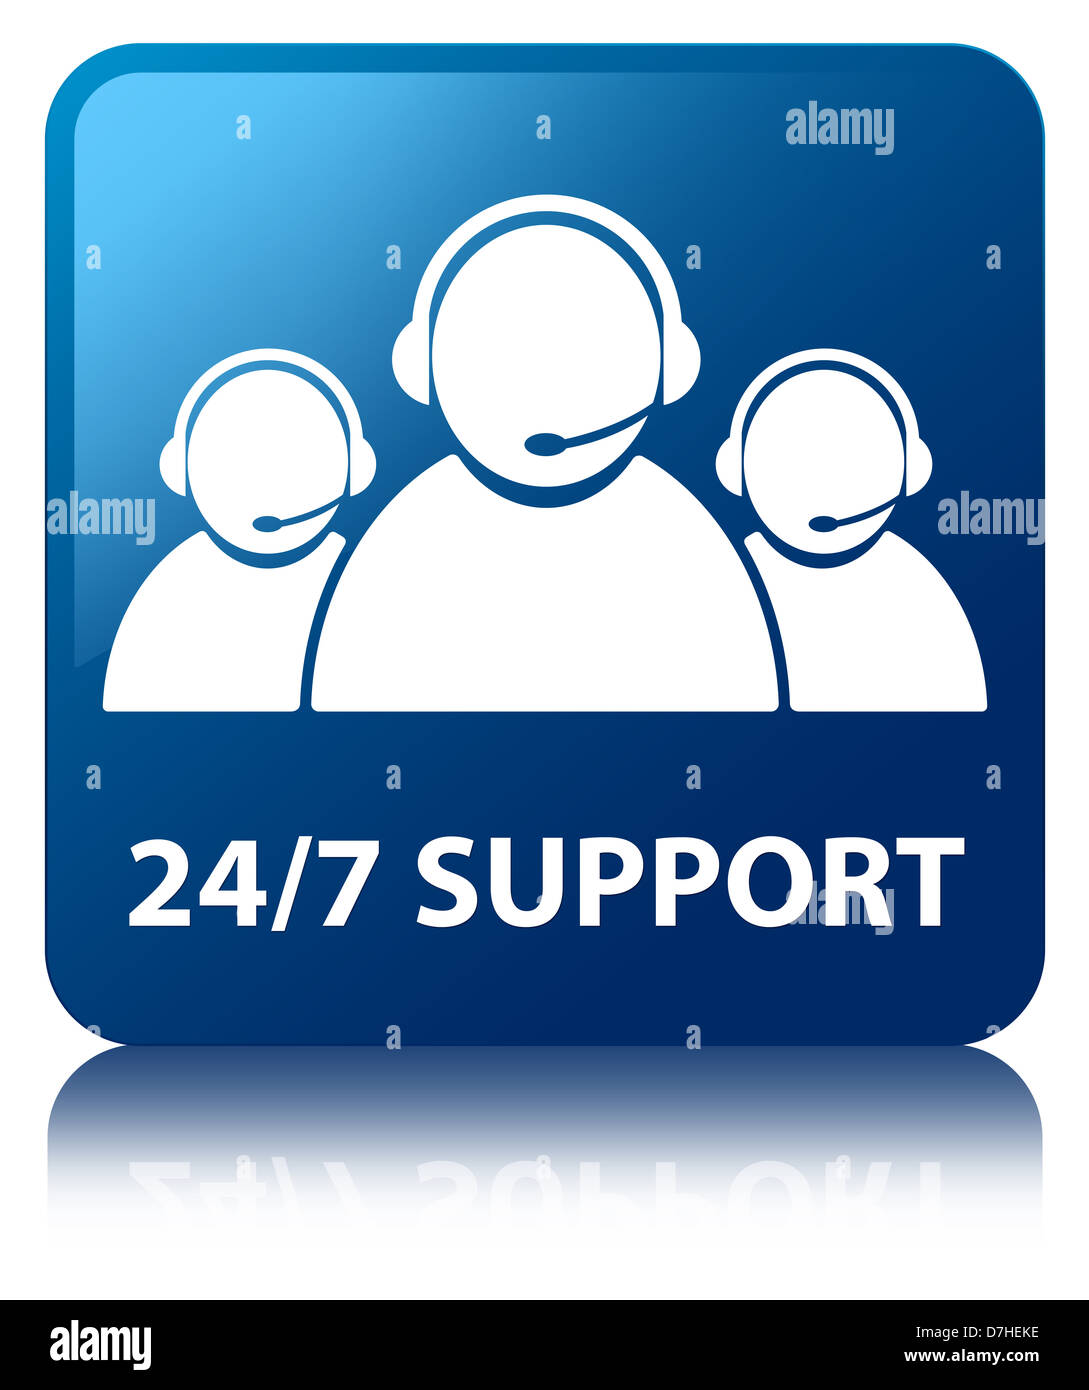 24/7 support blue square button Stock Photo